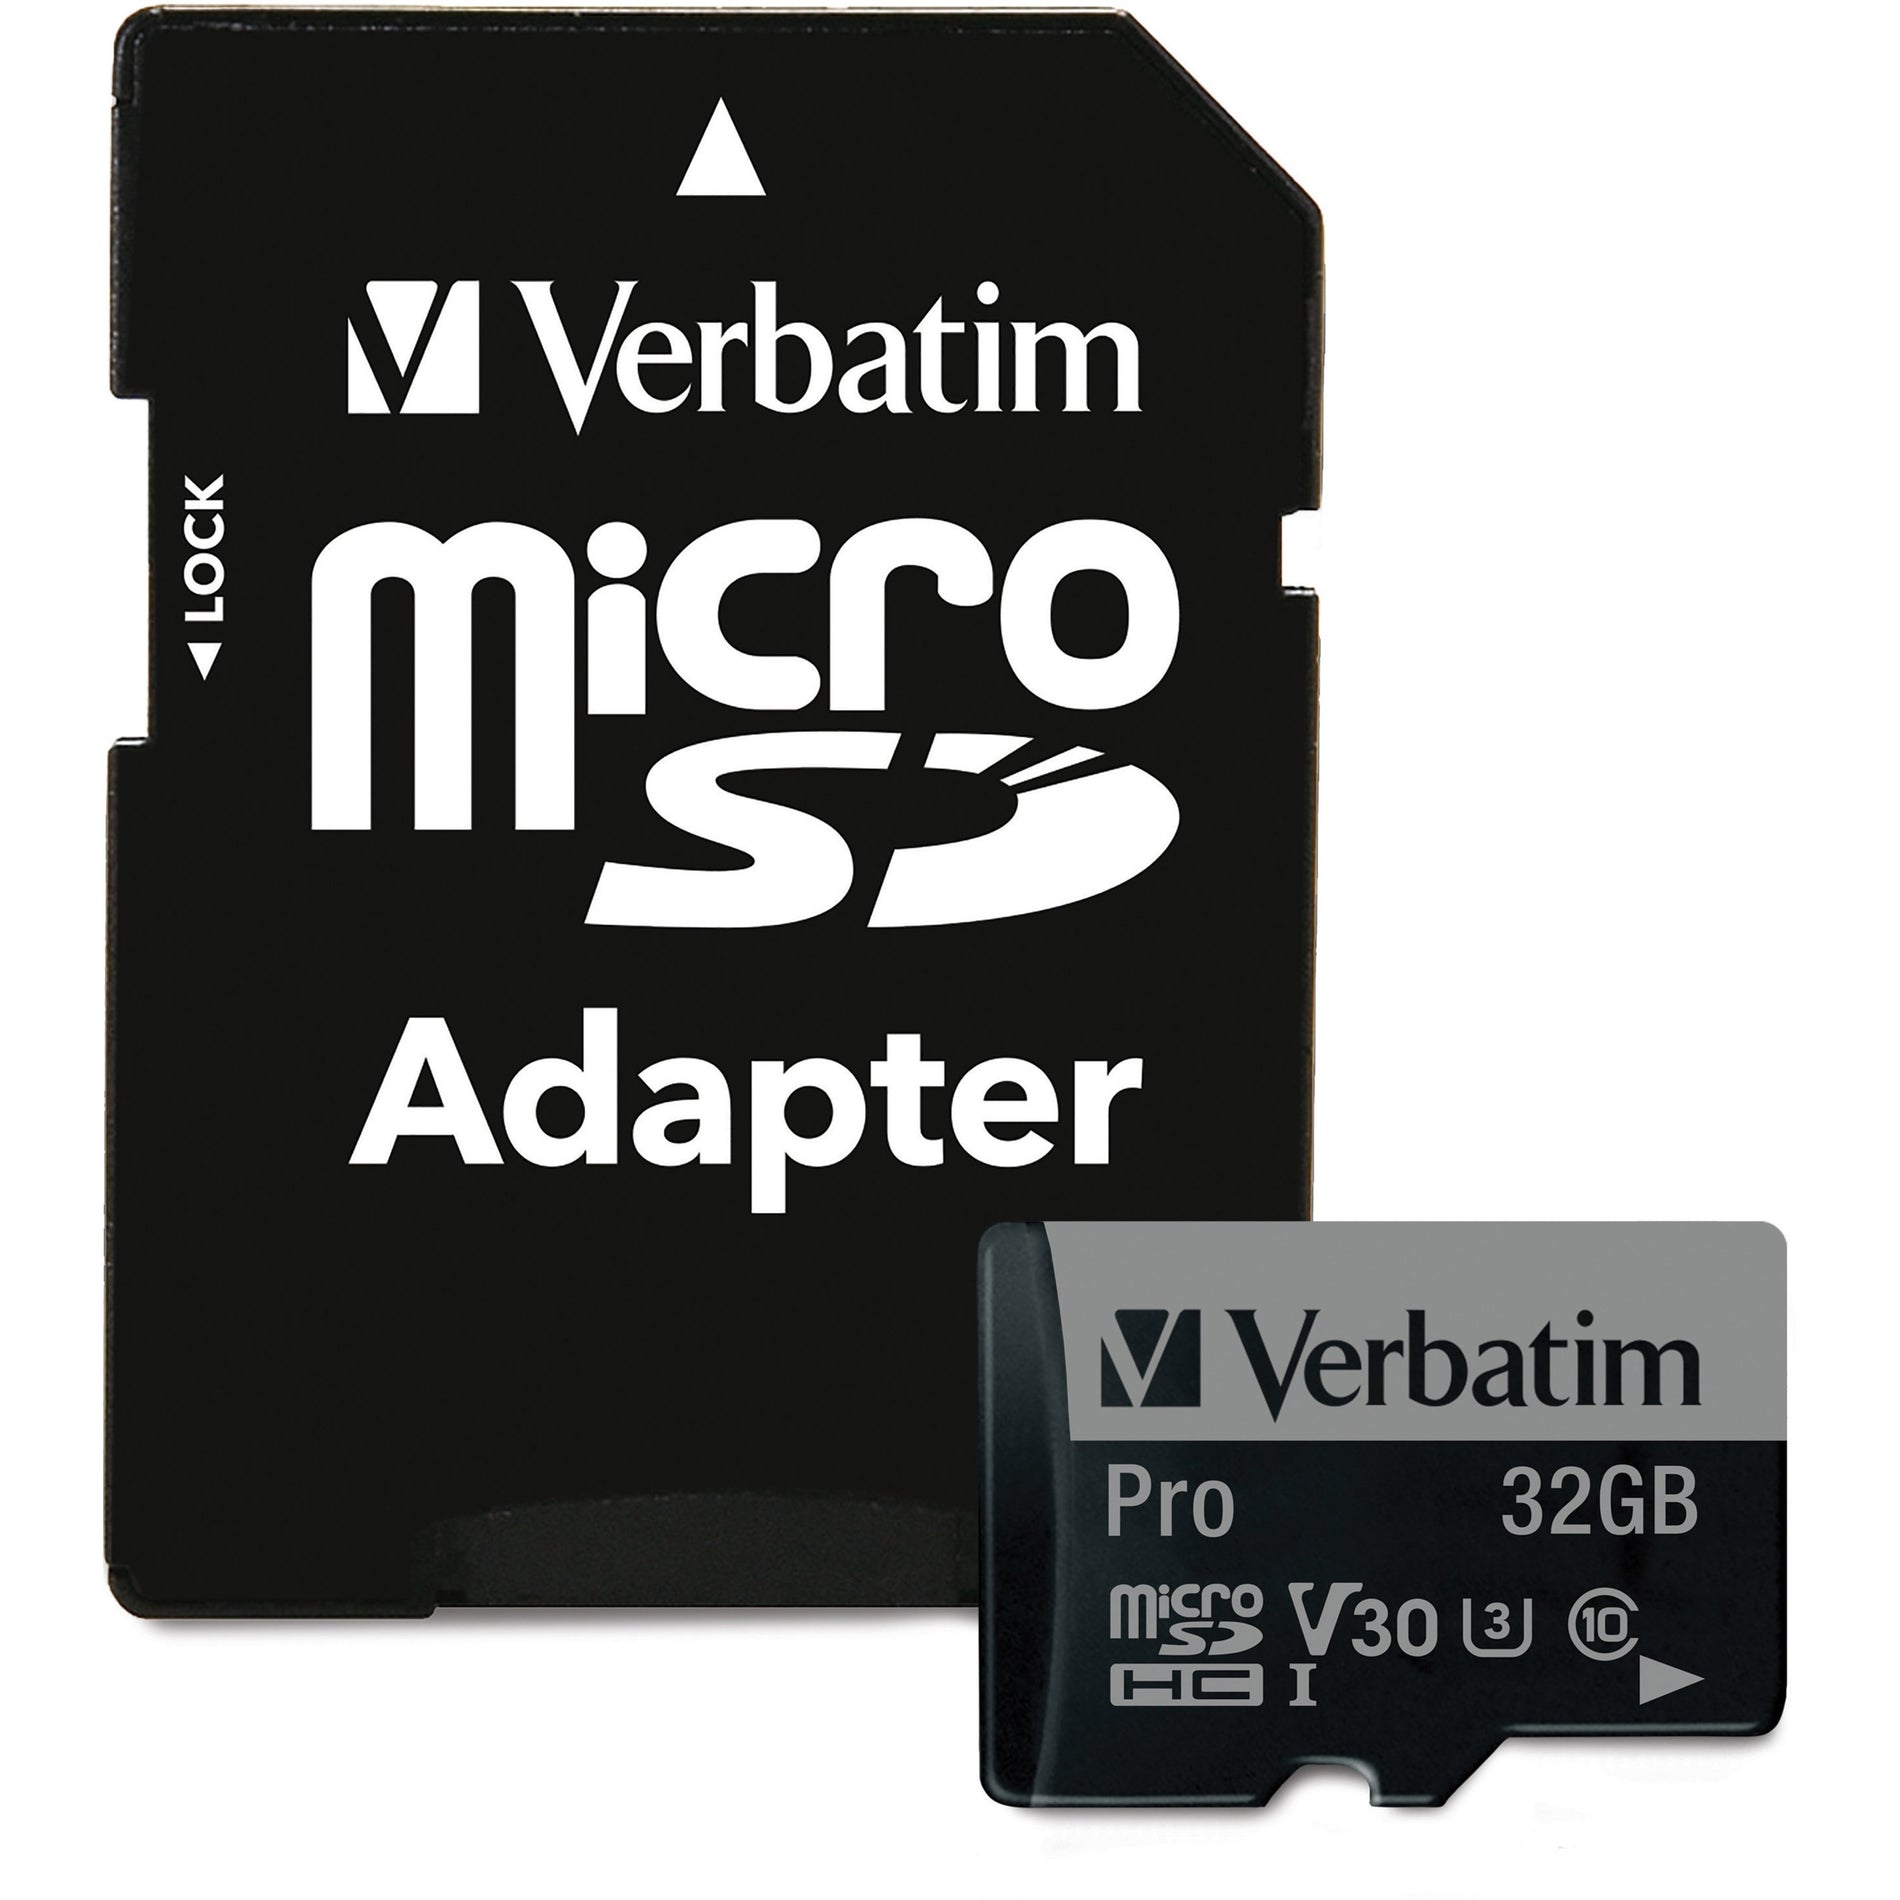 Verbatim 47041 Pro 600X microSDHC Memory Card, 32GB, Lifetime Warranty, UL Listed Certification